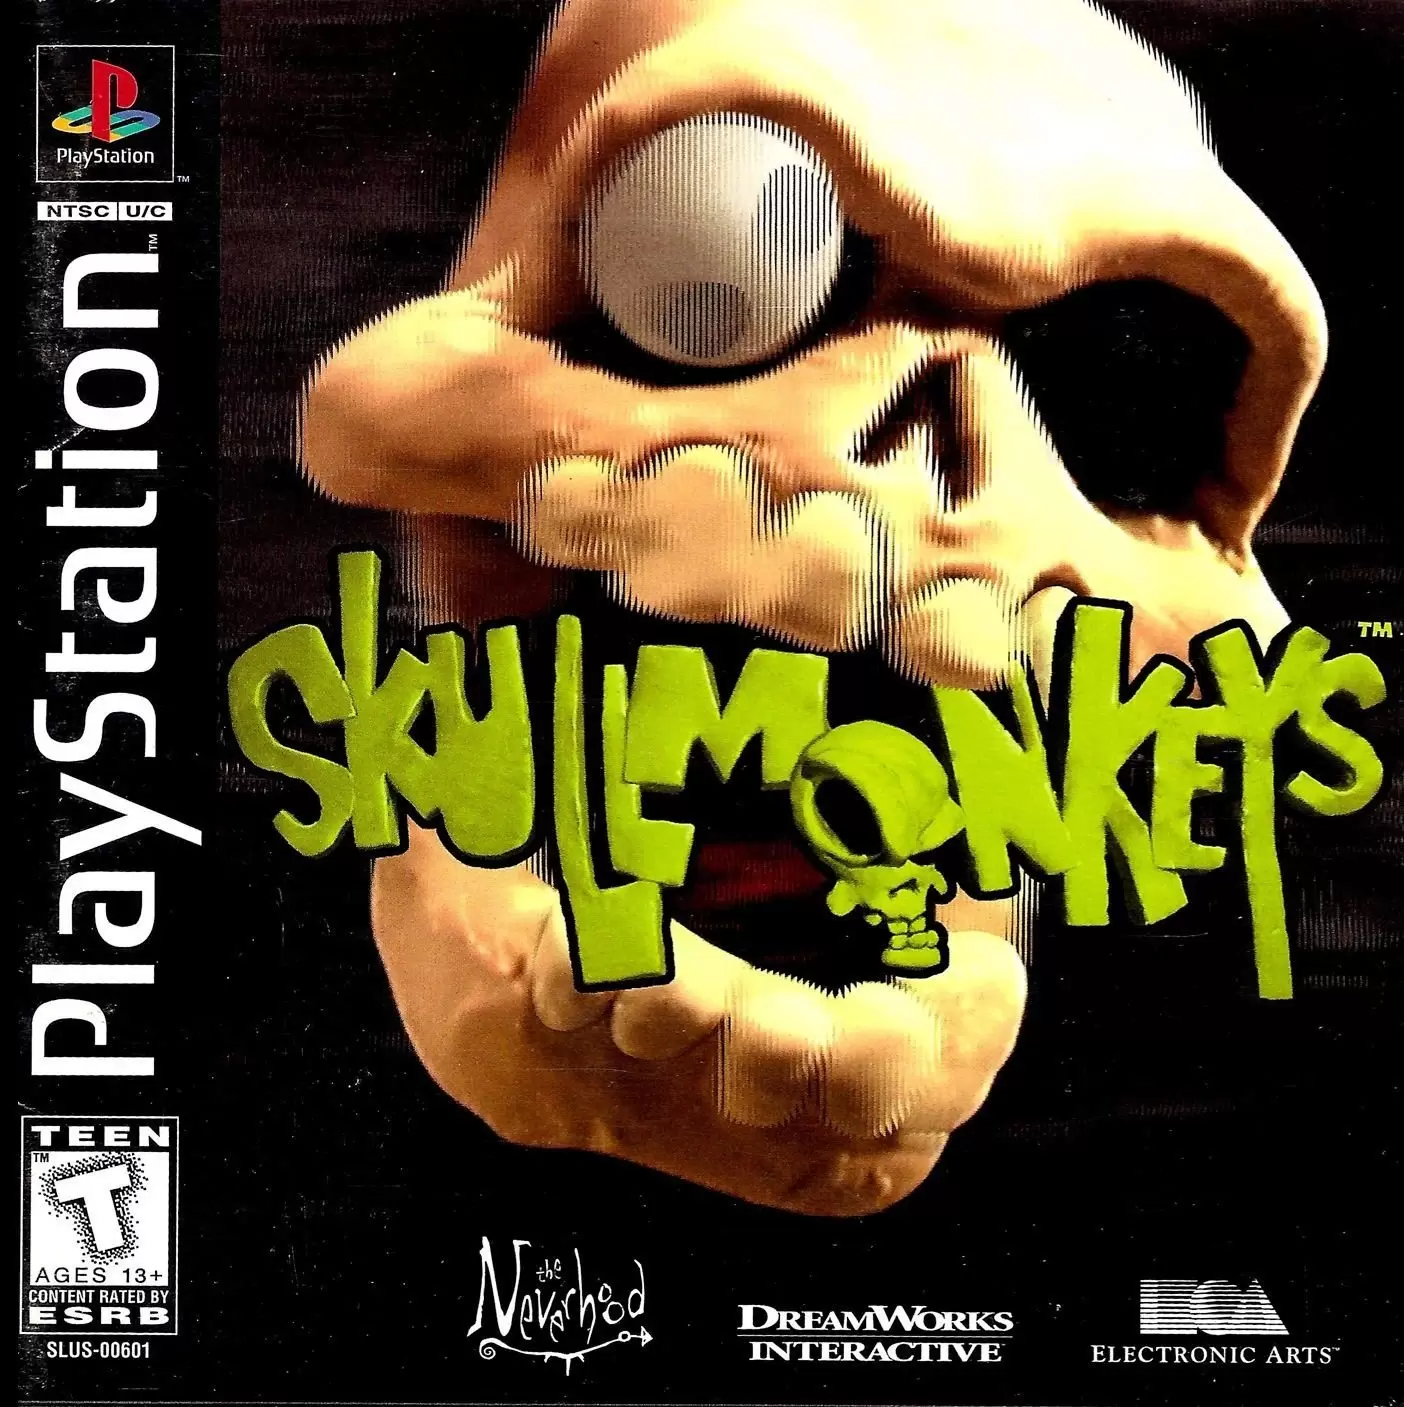 Playstation games - Skullmonkeys